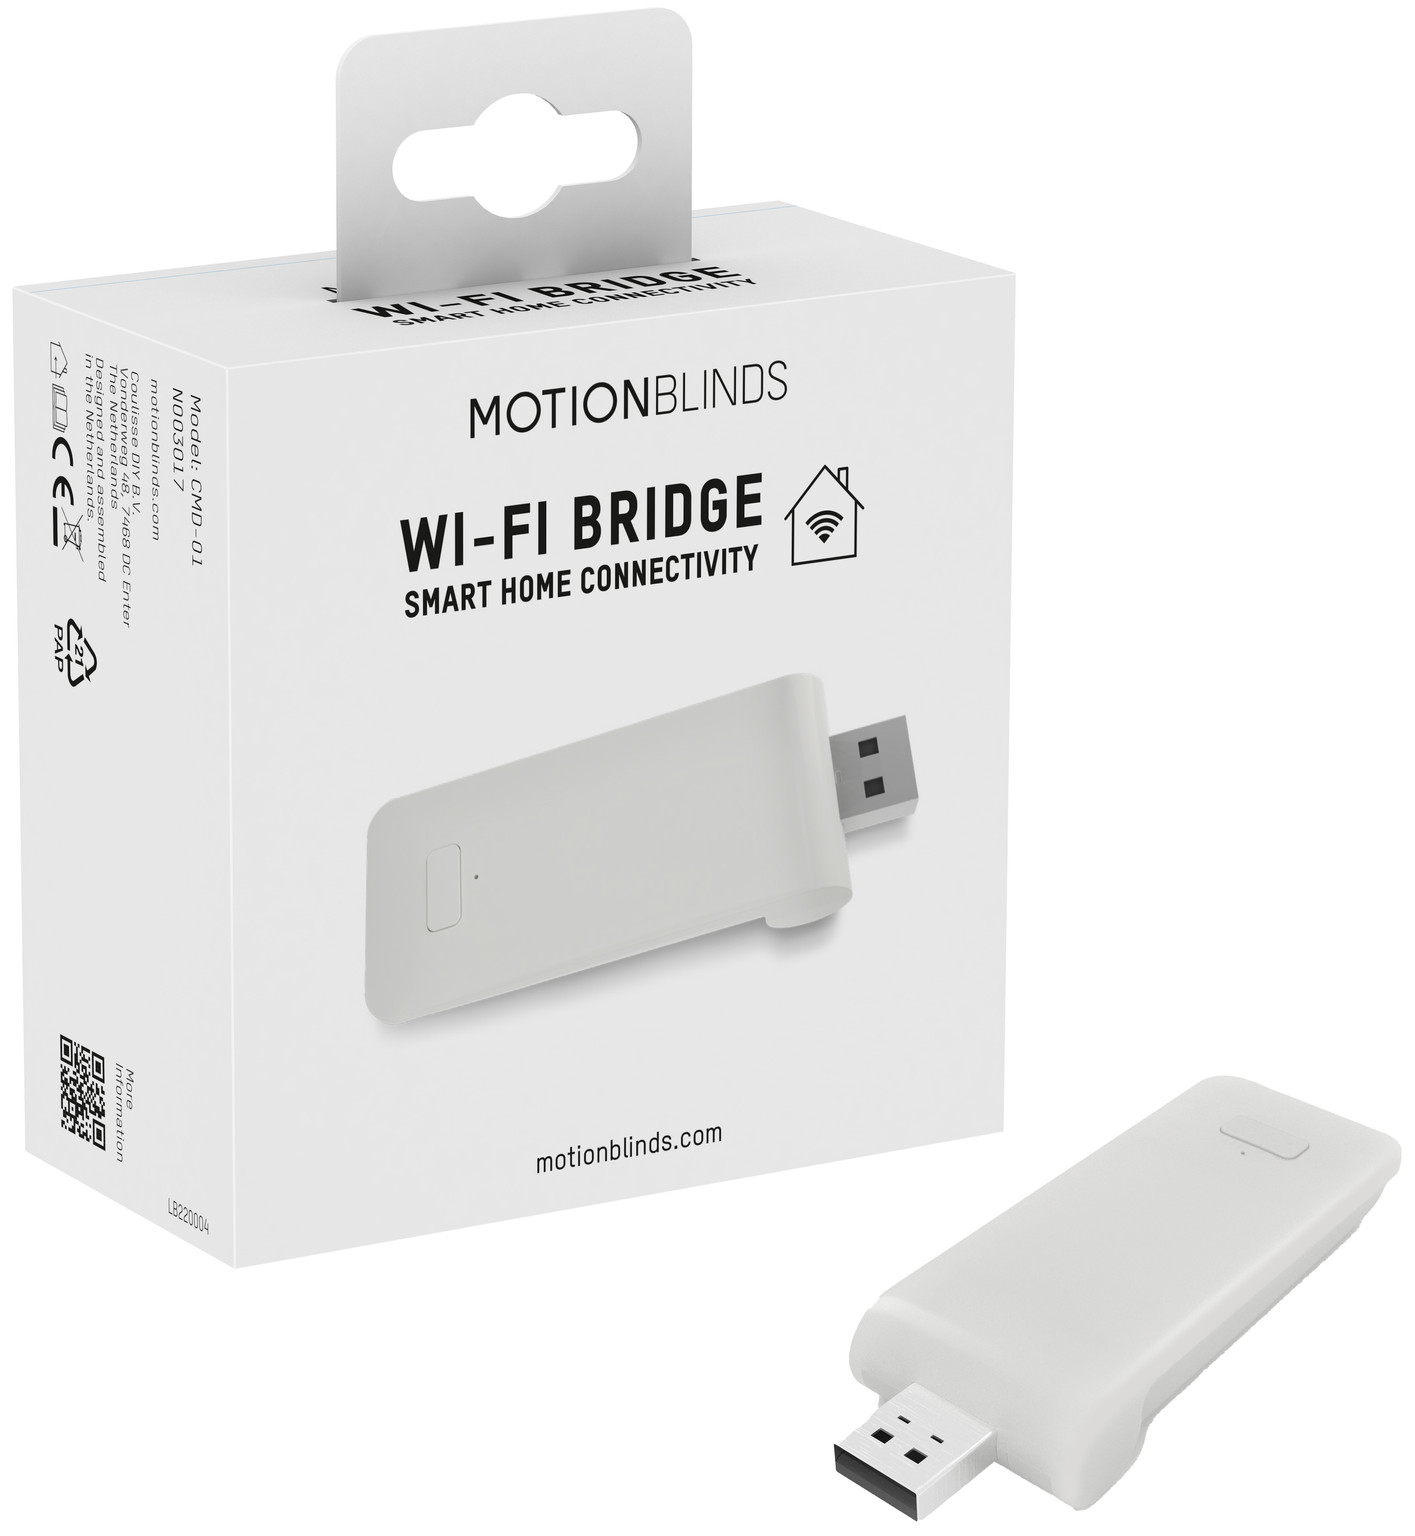 MotionBlinds WiFi Bridge